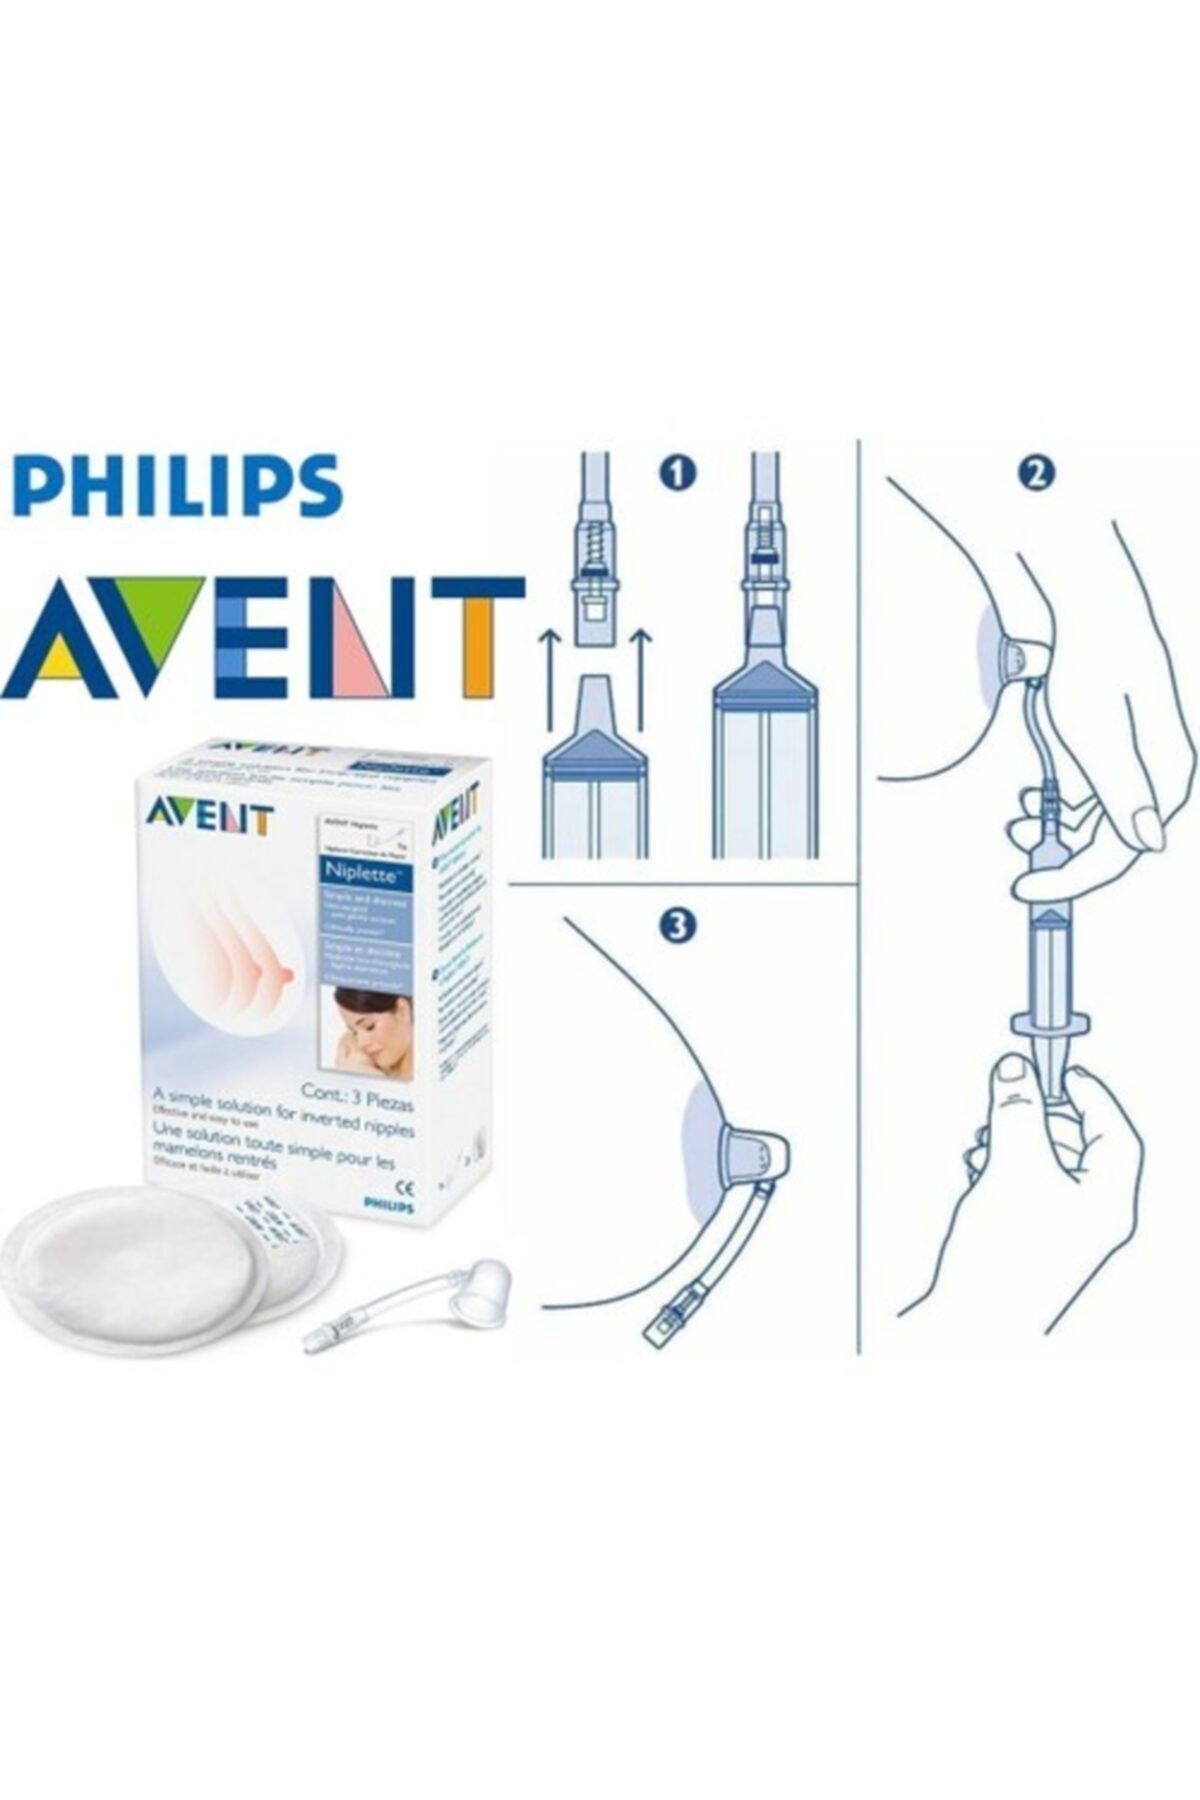 Philips Avent Scf152/01 Tek Niplette Göğüs Ucu Çıkartıcı